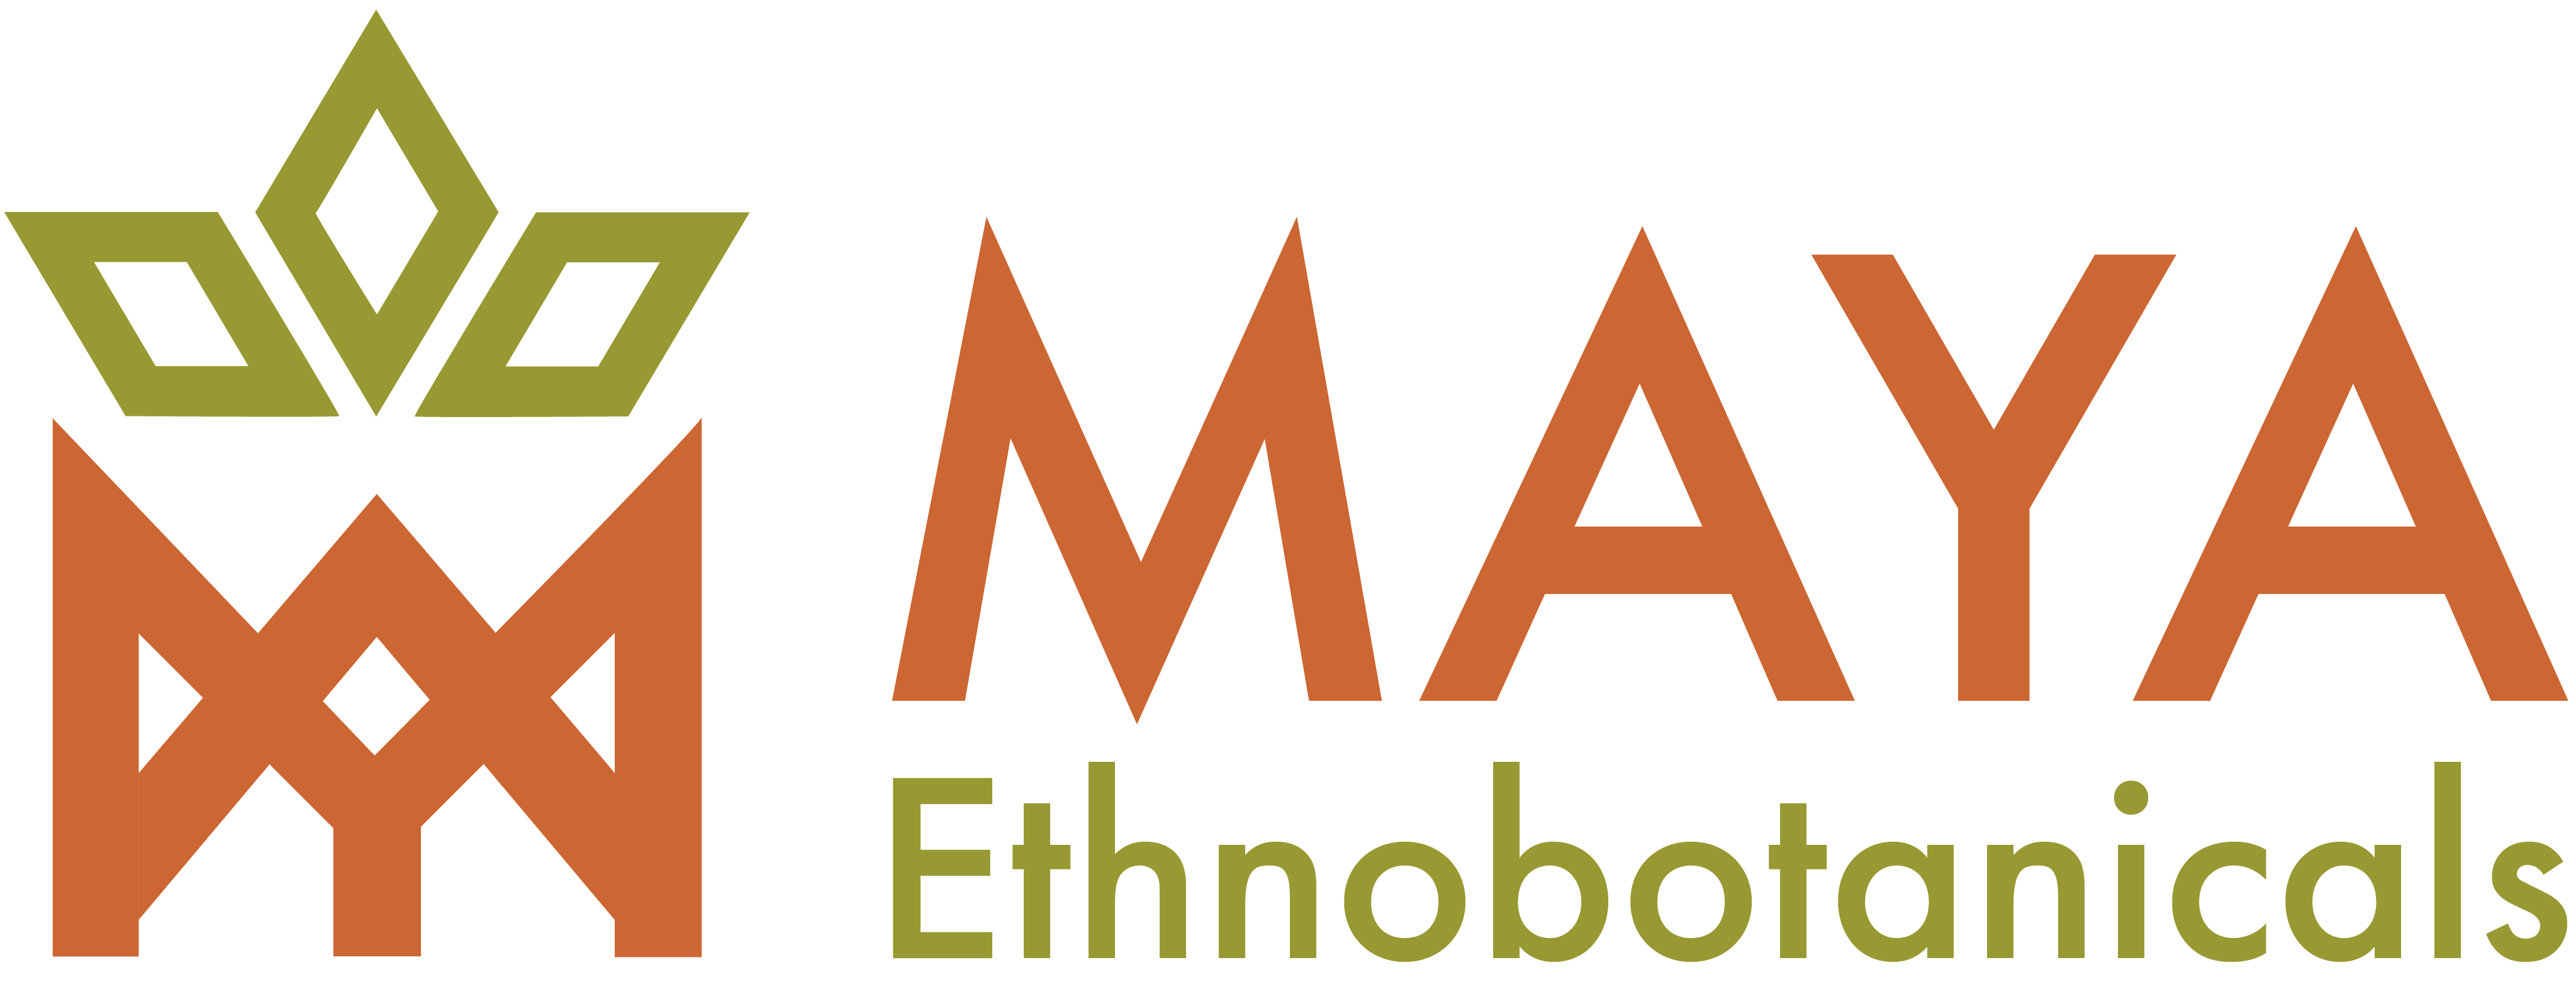 MAYA Ethnobotanicals logo